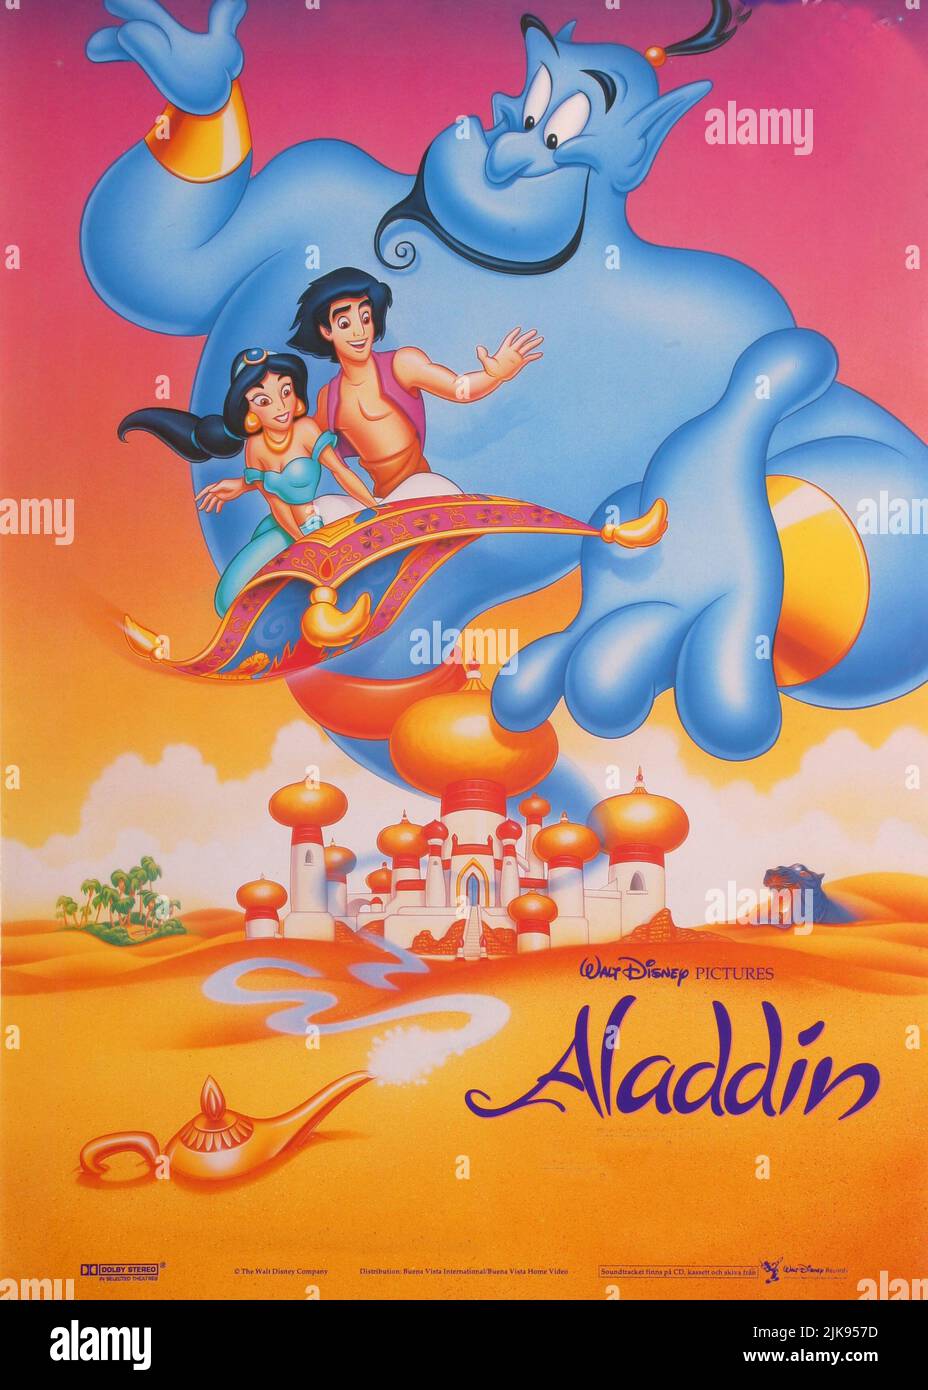 Princess jasmine aladdin hi-res stock photography and images - Alamy